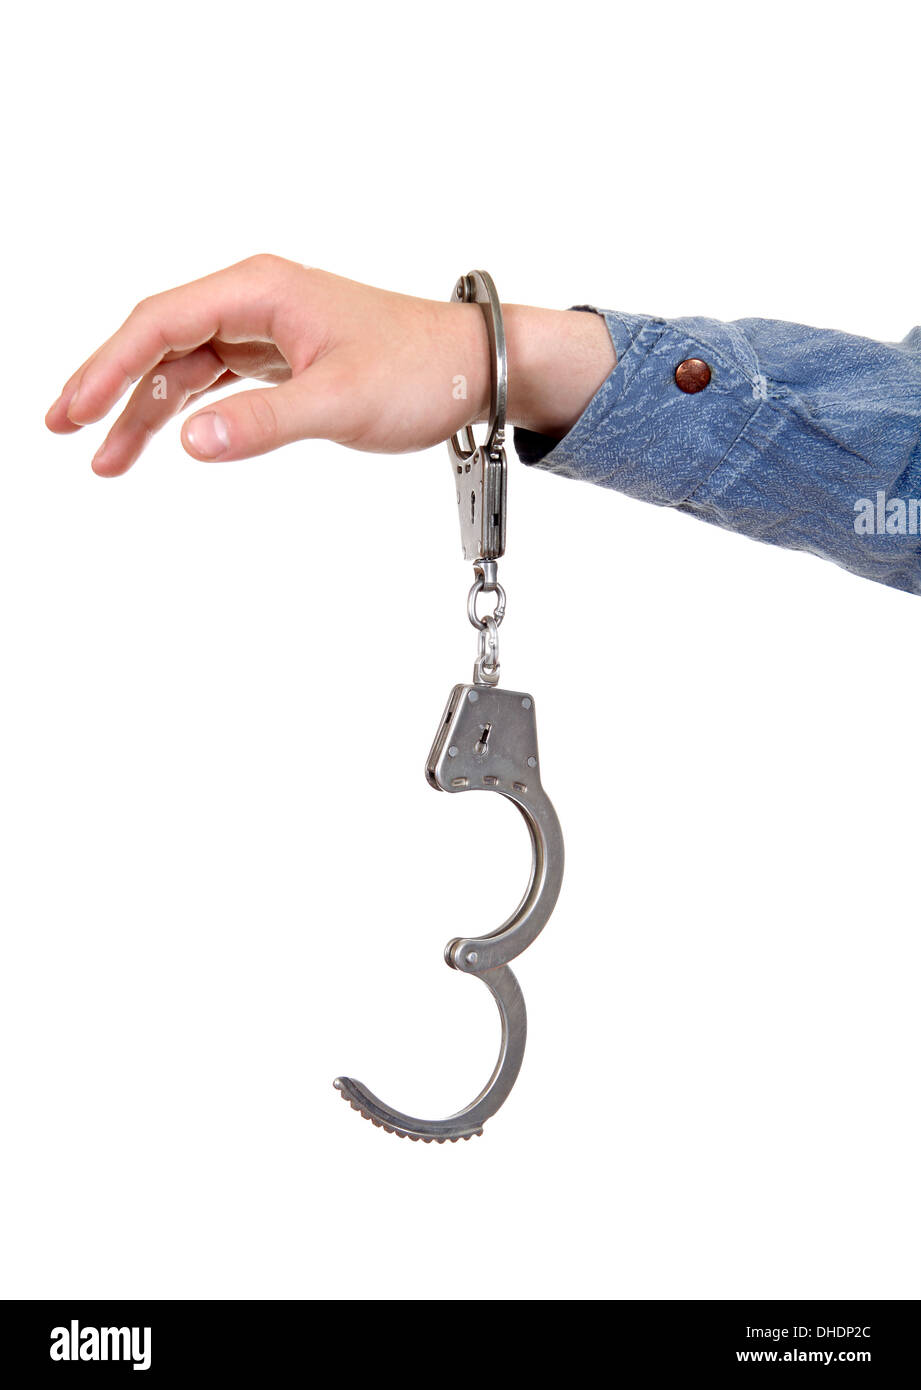 Unlocked Handcuffs on a Hand Stock Photo